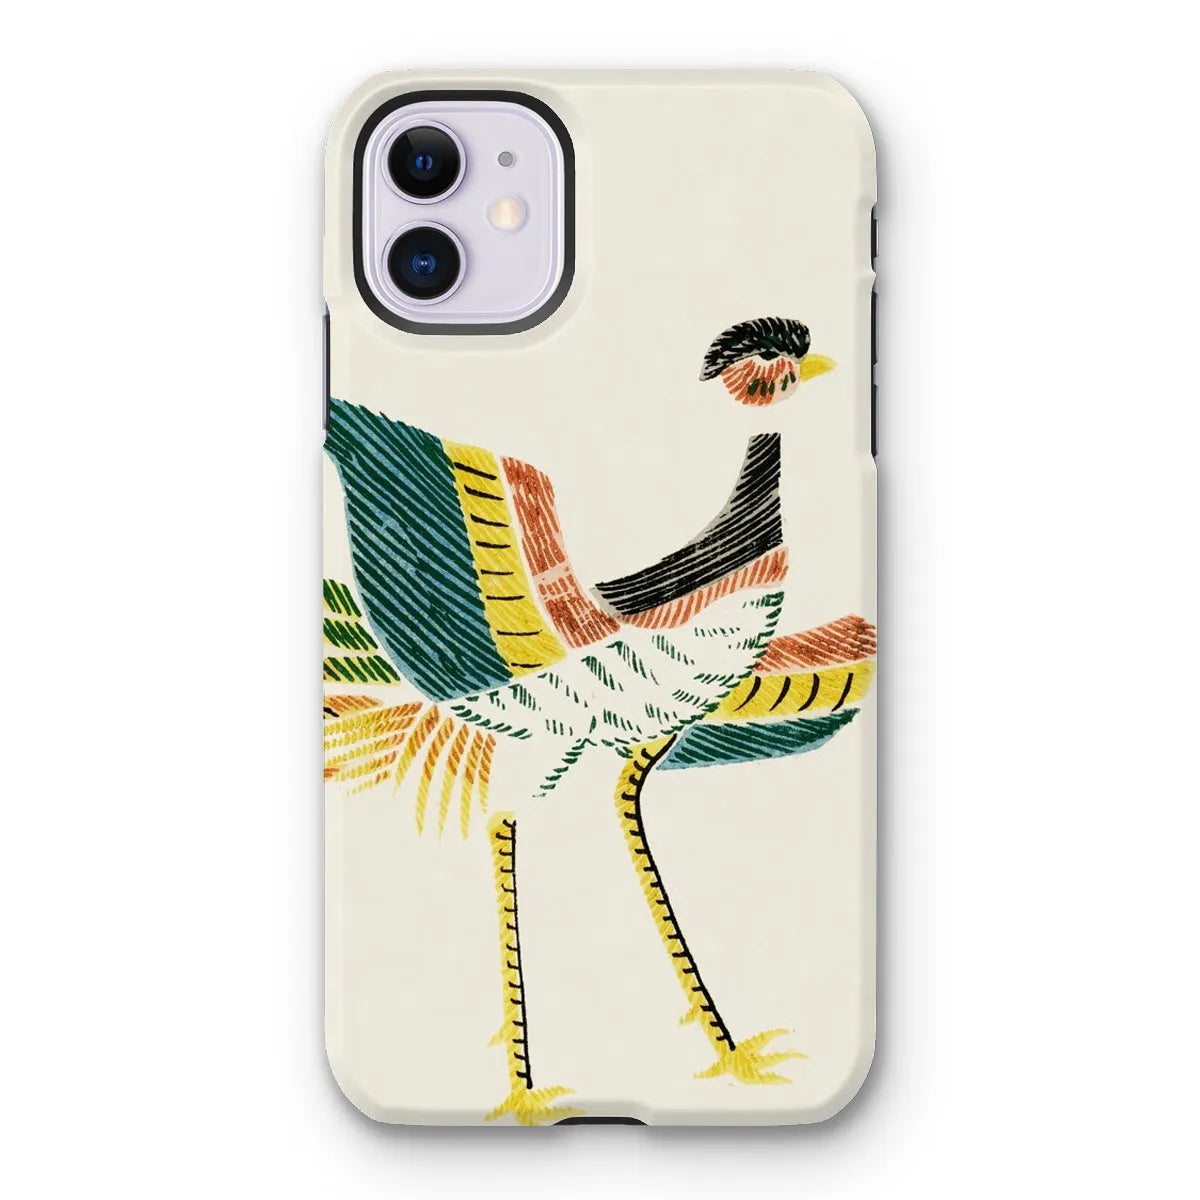 Woodblock Crane - Japanese Bird Phone Case - Taguchi Tomoki - Iphone 11 / Matte - Mobile Phone Cases - Aesthetic Art